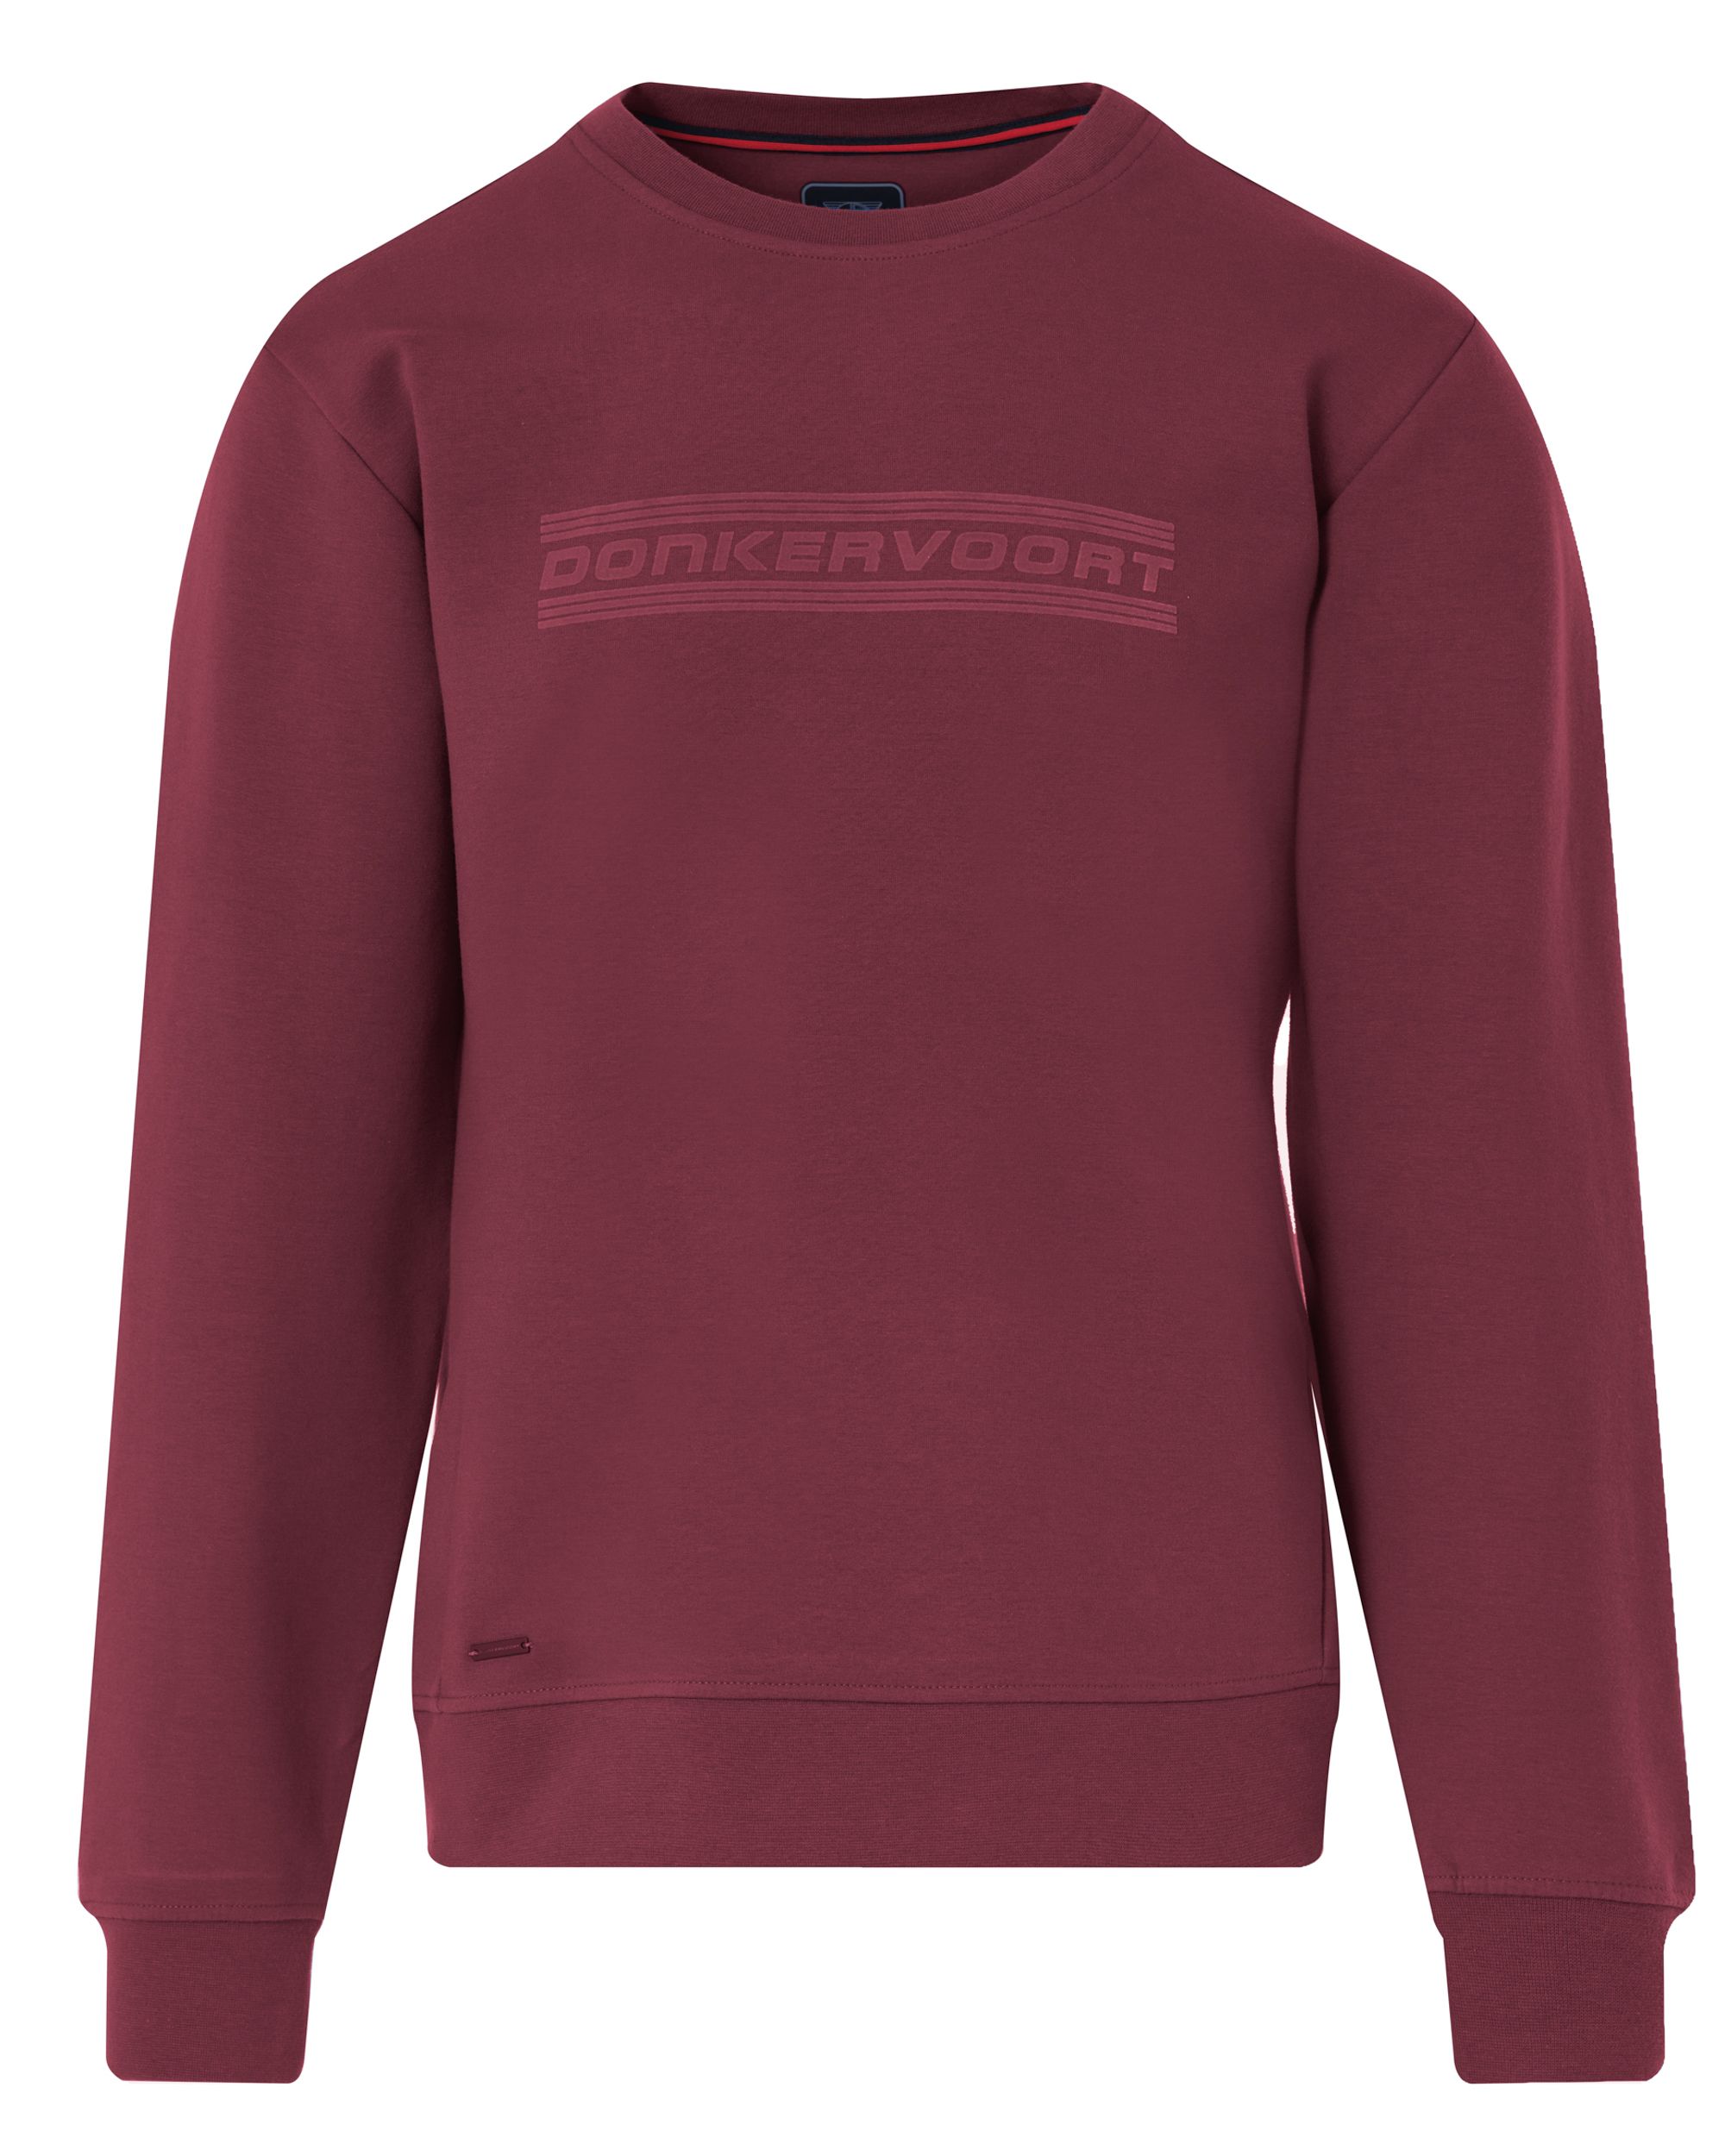 Donkervoort Sweater Choco Truffle 086790-002-L